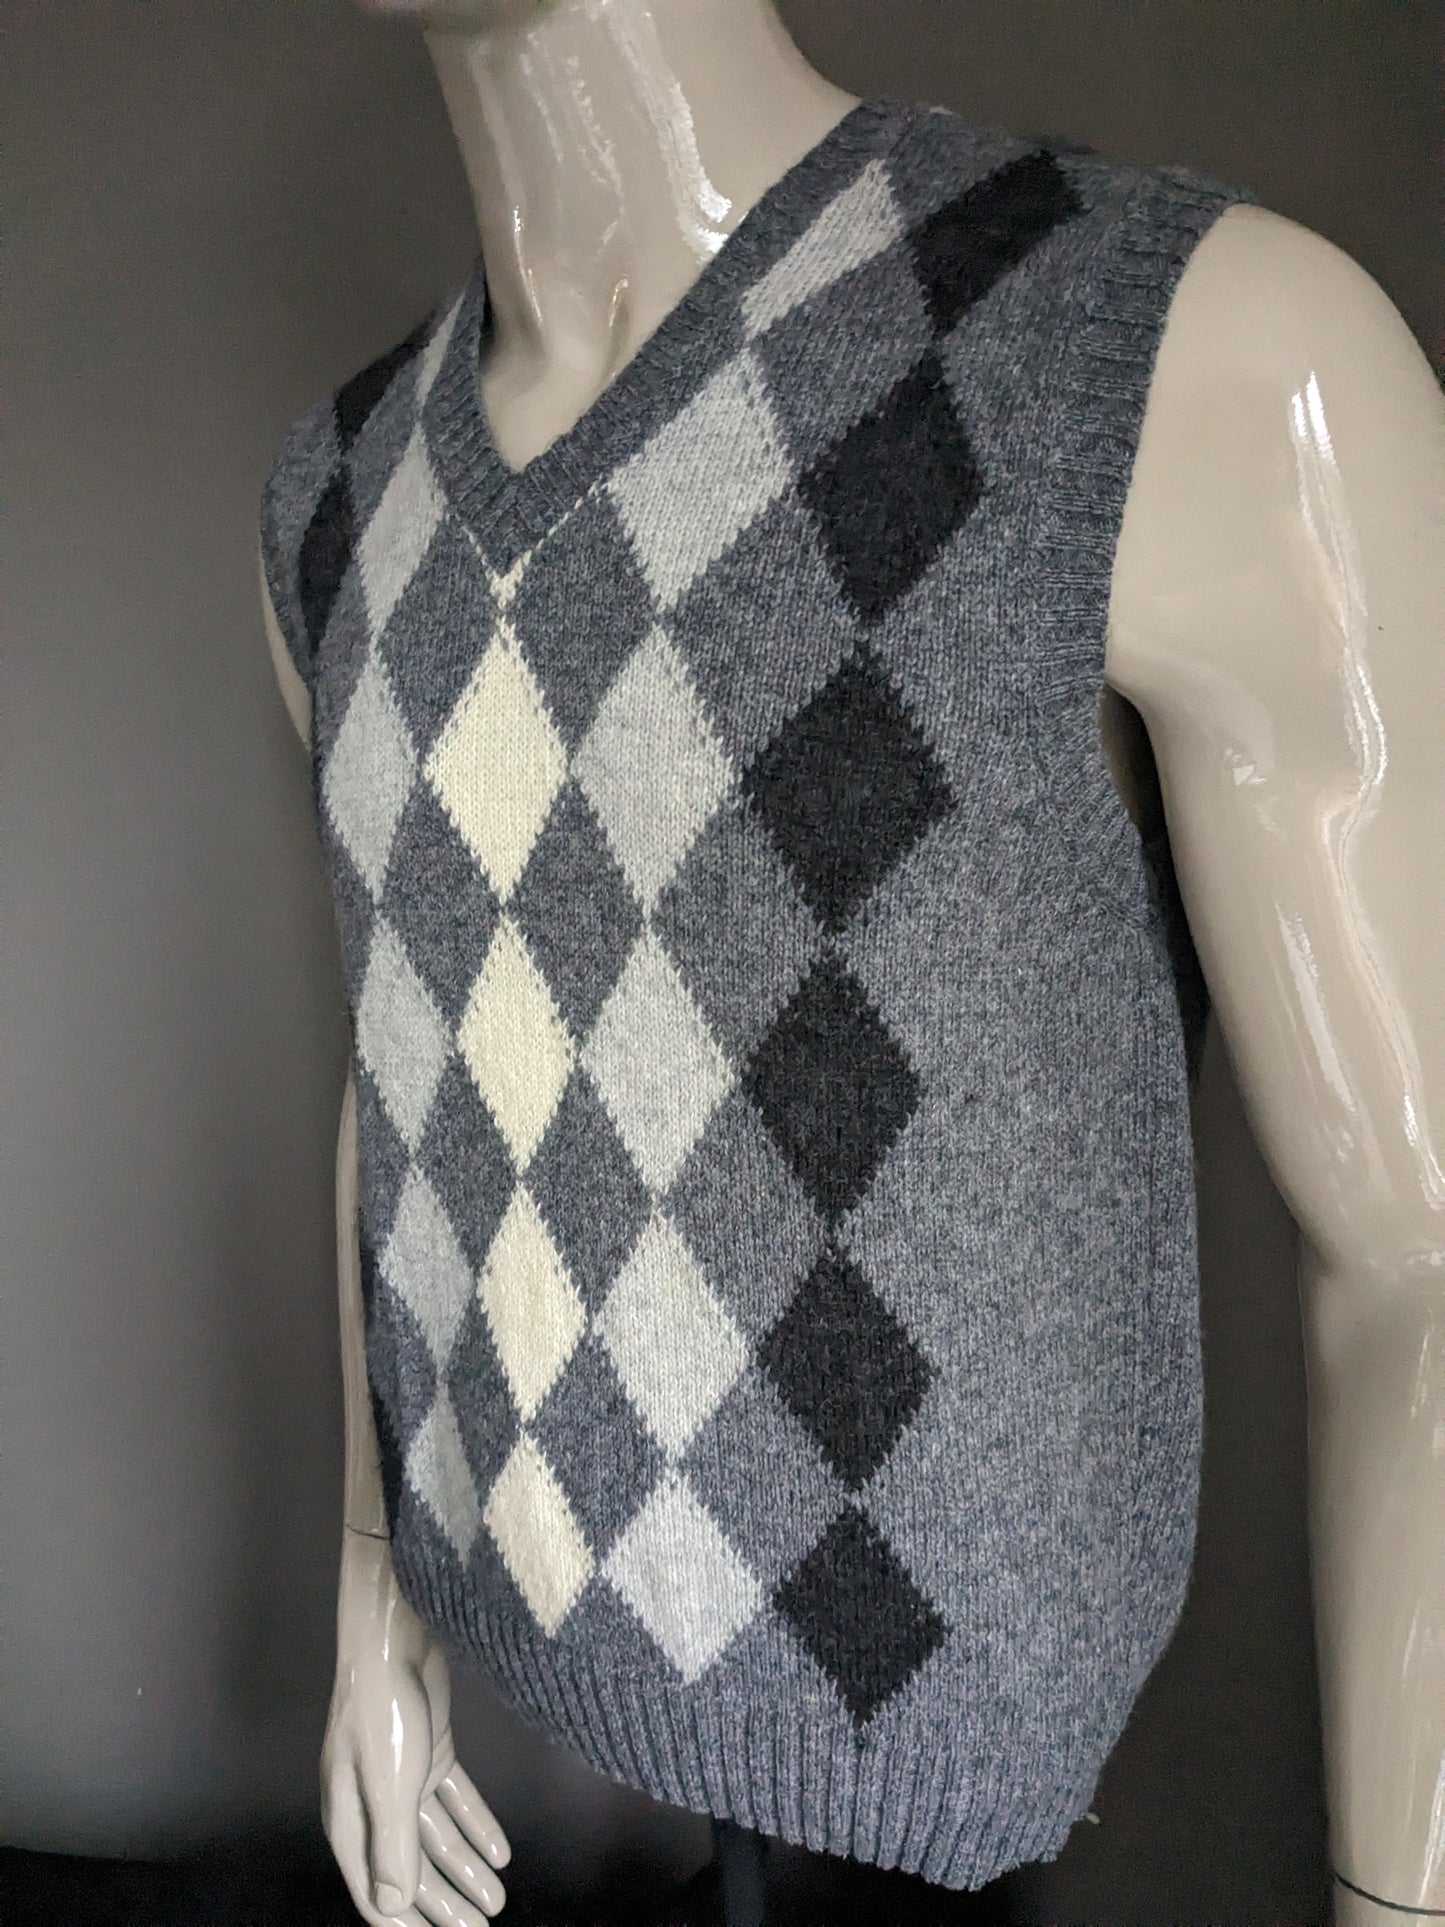 Vintage Hill & Archer WOOLS Spencer. Gray beige Argyle motif. Size L. 70% wool.